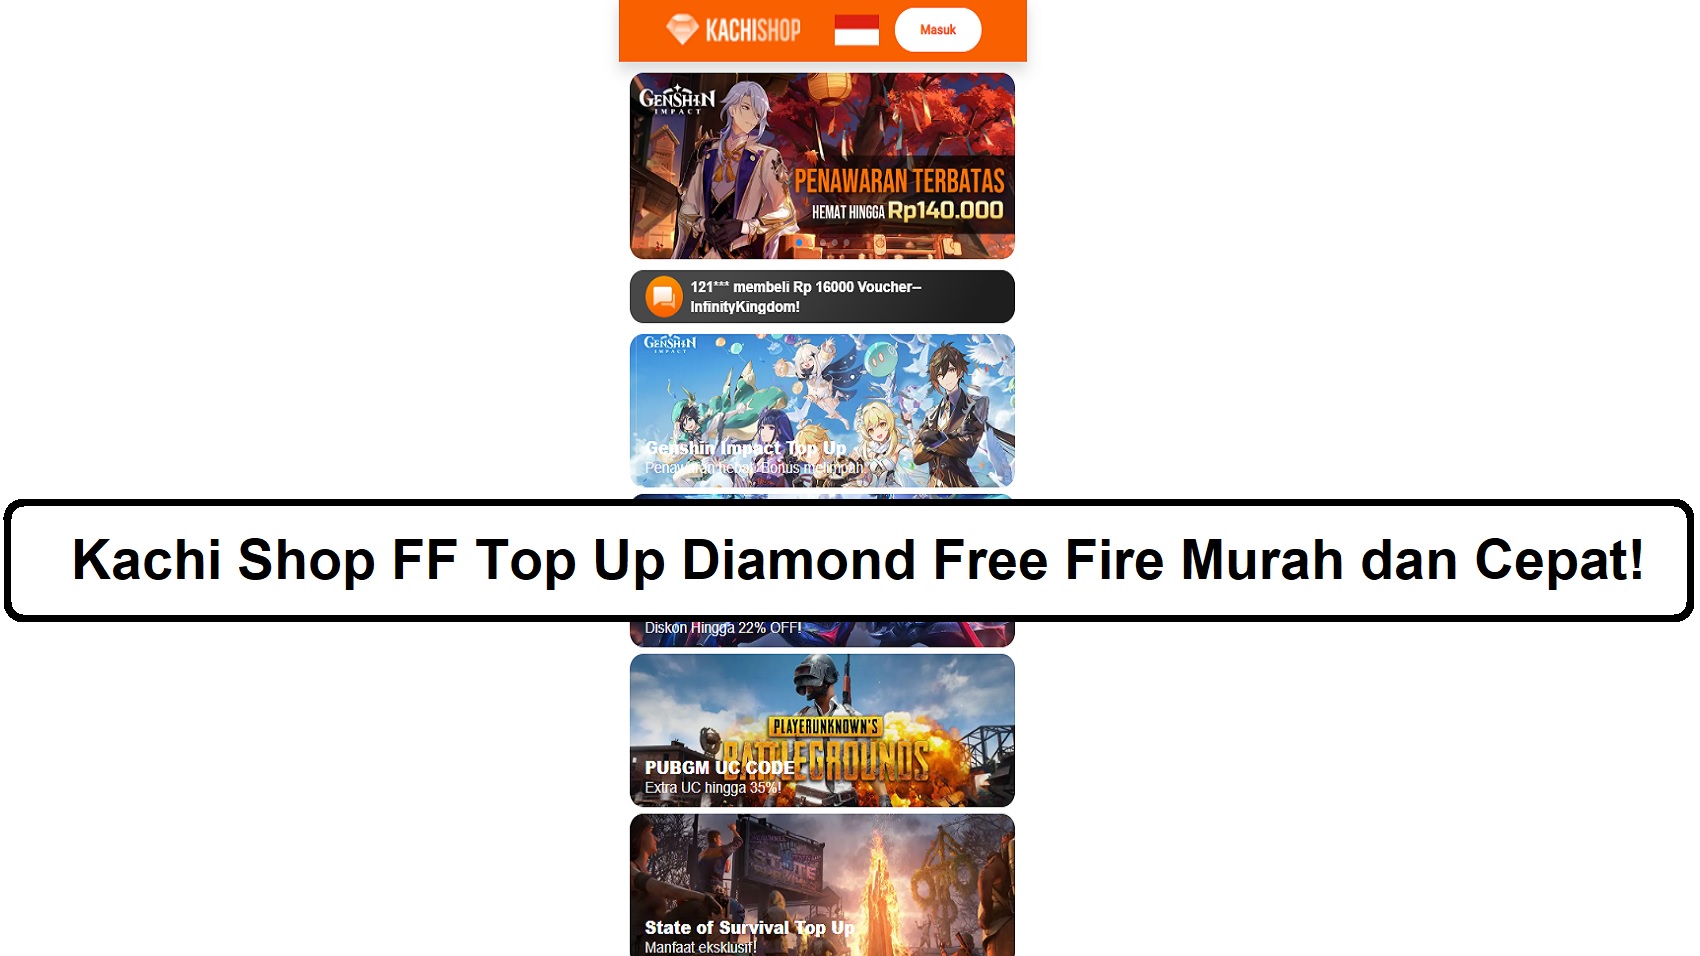 Kachi Shop FF Top Up Diamond Free Fire Murah dan Cepat!